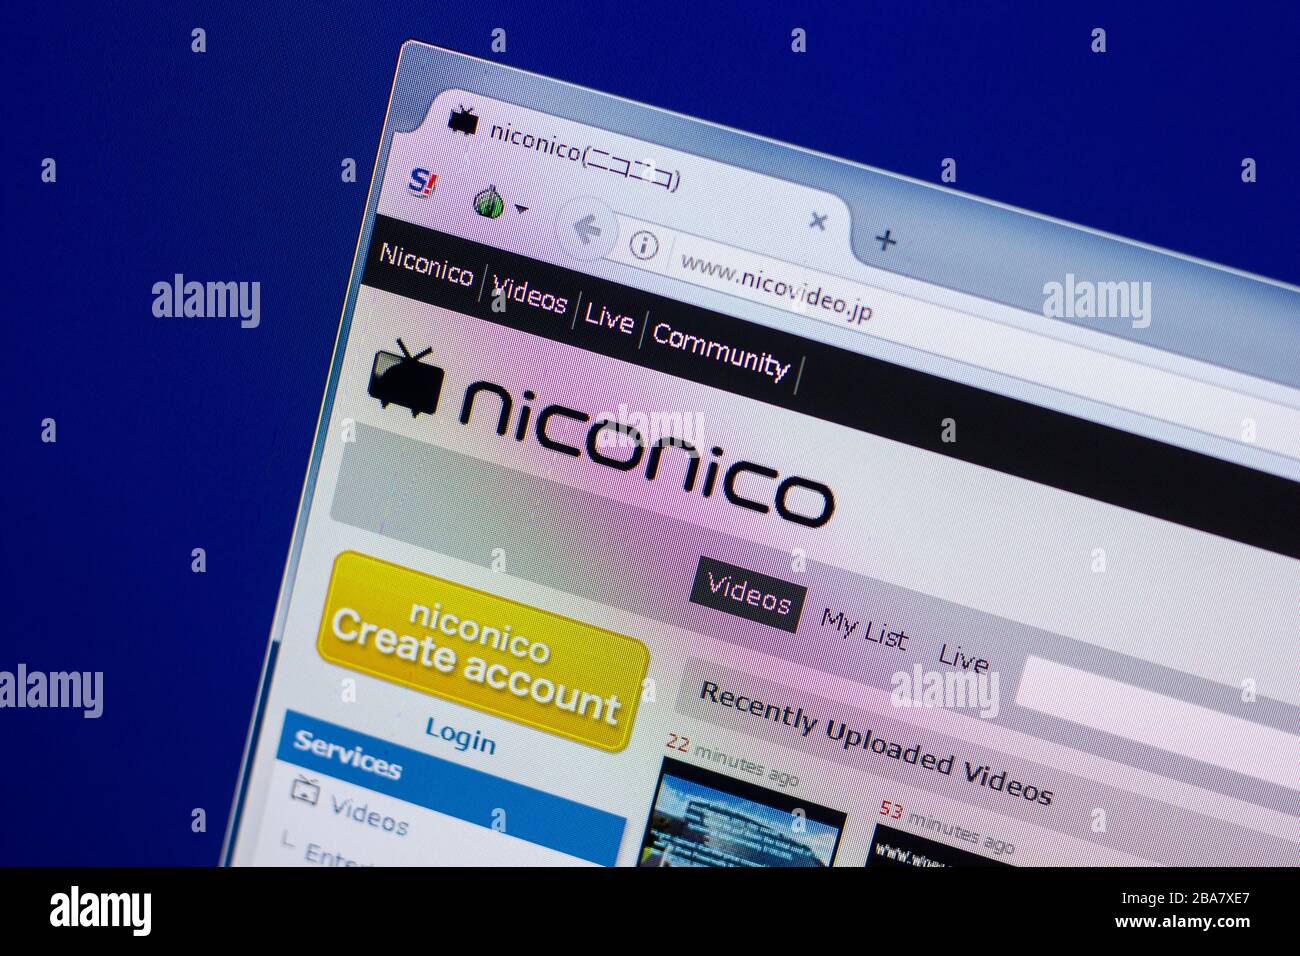 Ryazan, Russia - April 16, 2018 - Homepage of Niconico or Nico Video website on the display of PC, url - nicovideo.jp. Stock Photo